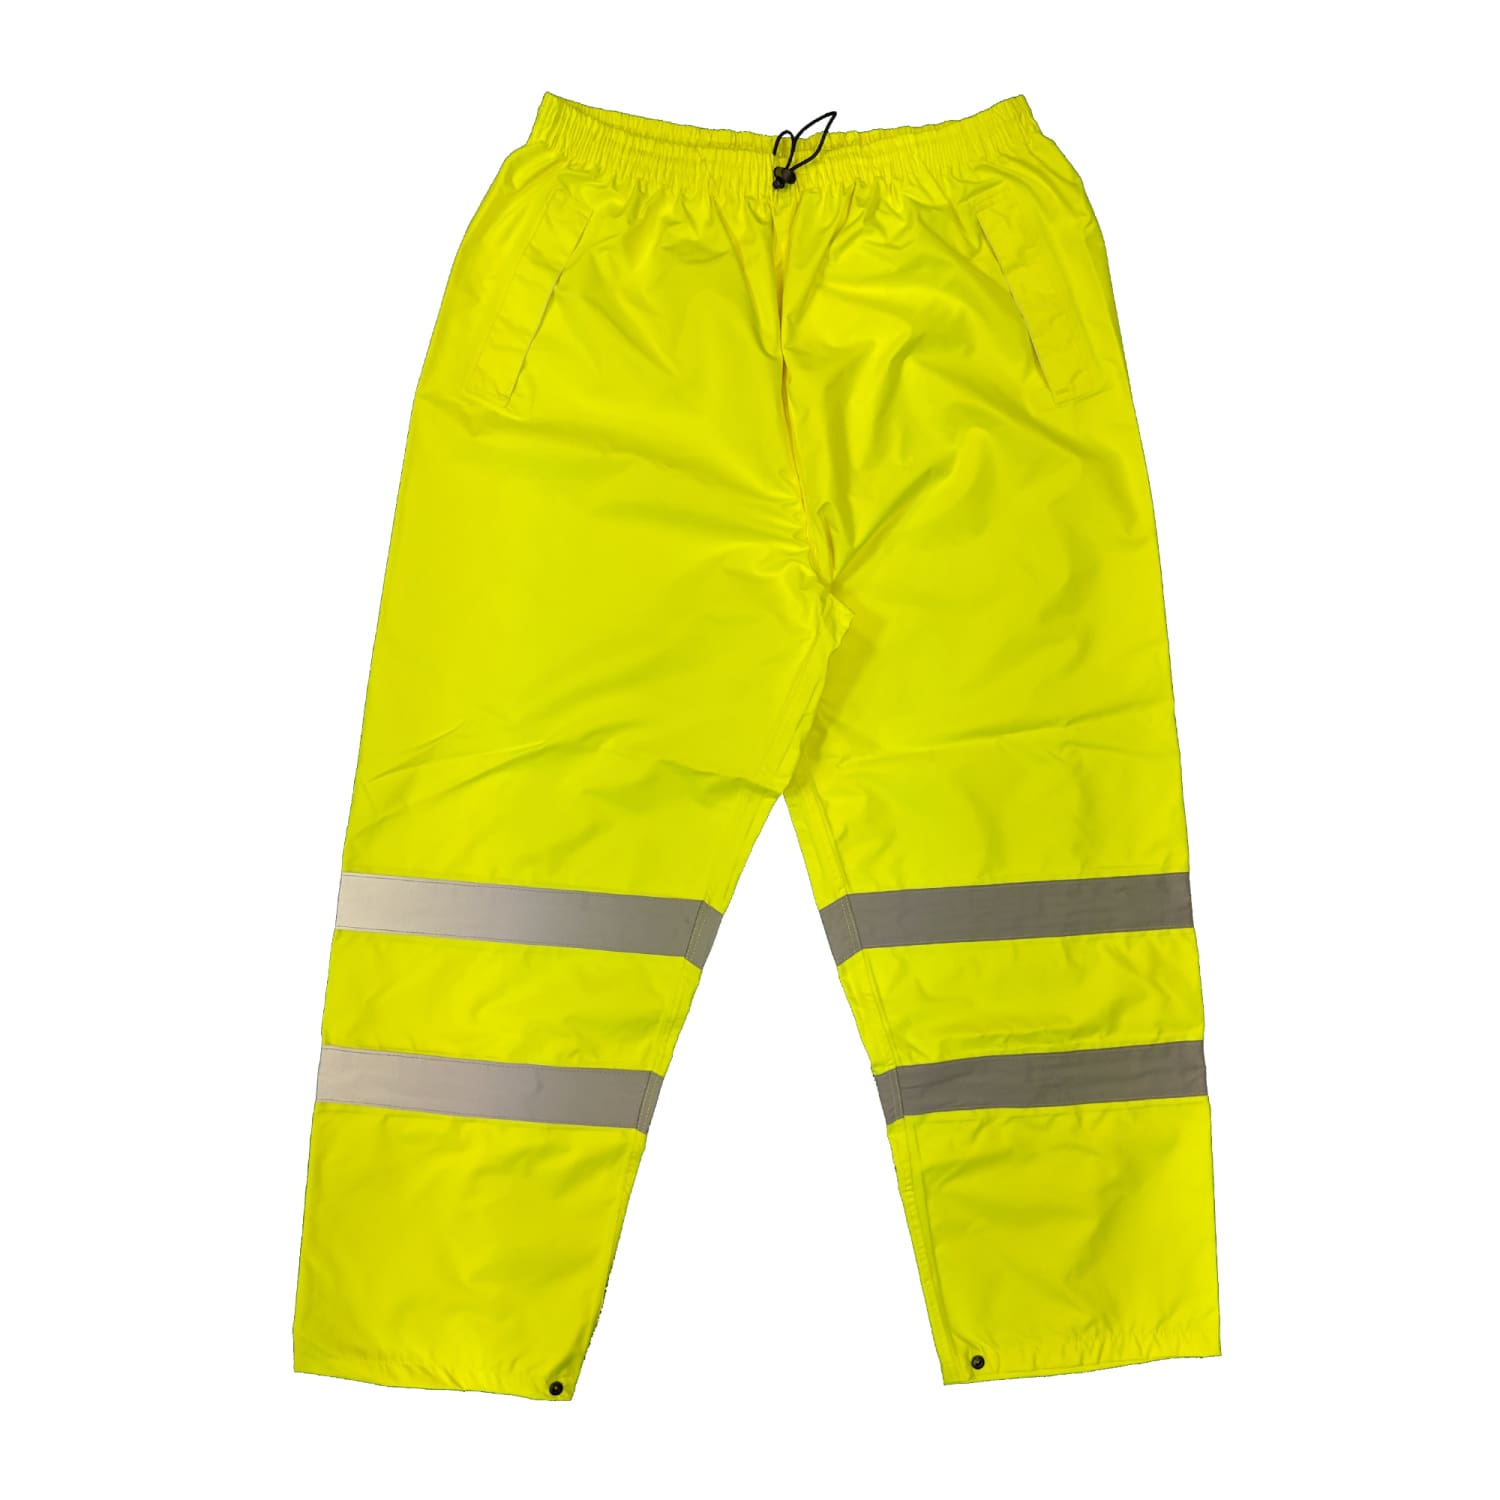 Regatta Hi-Vis Waterproof Trousers - TRW429 - Yellow 1